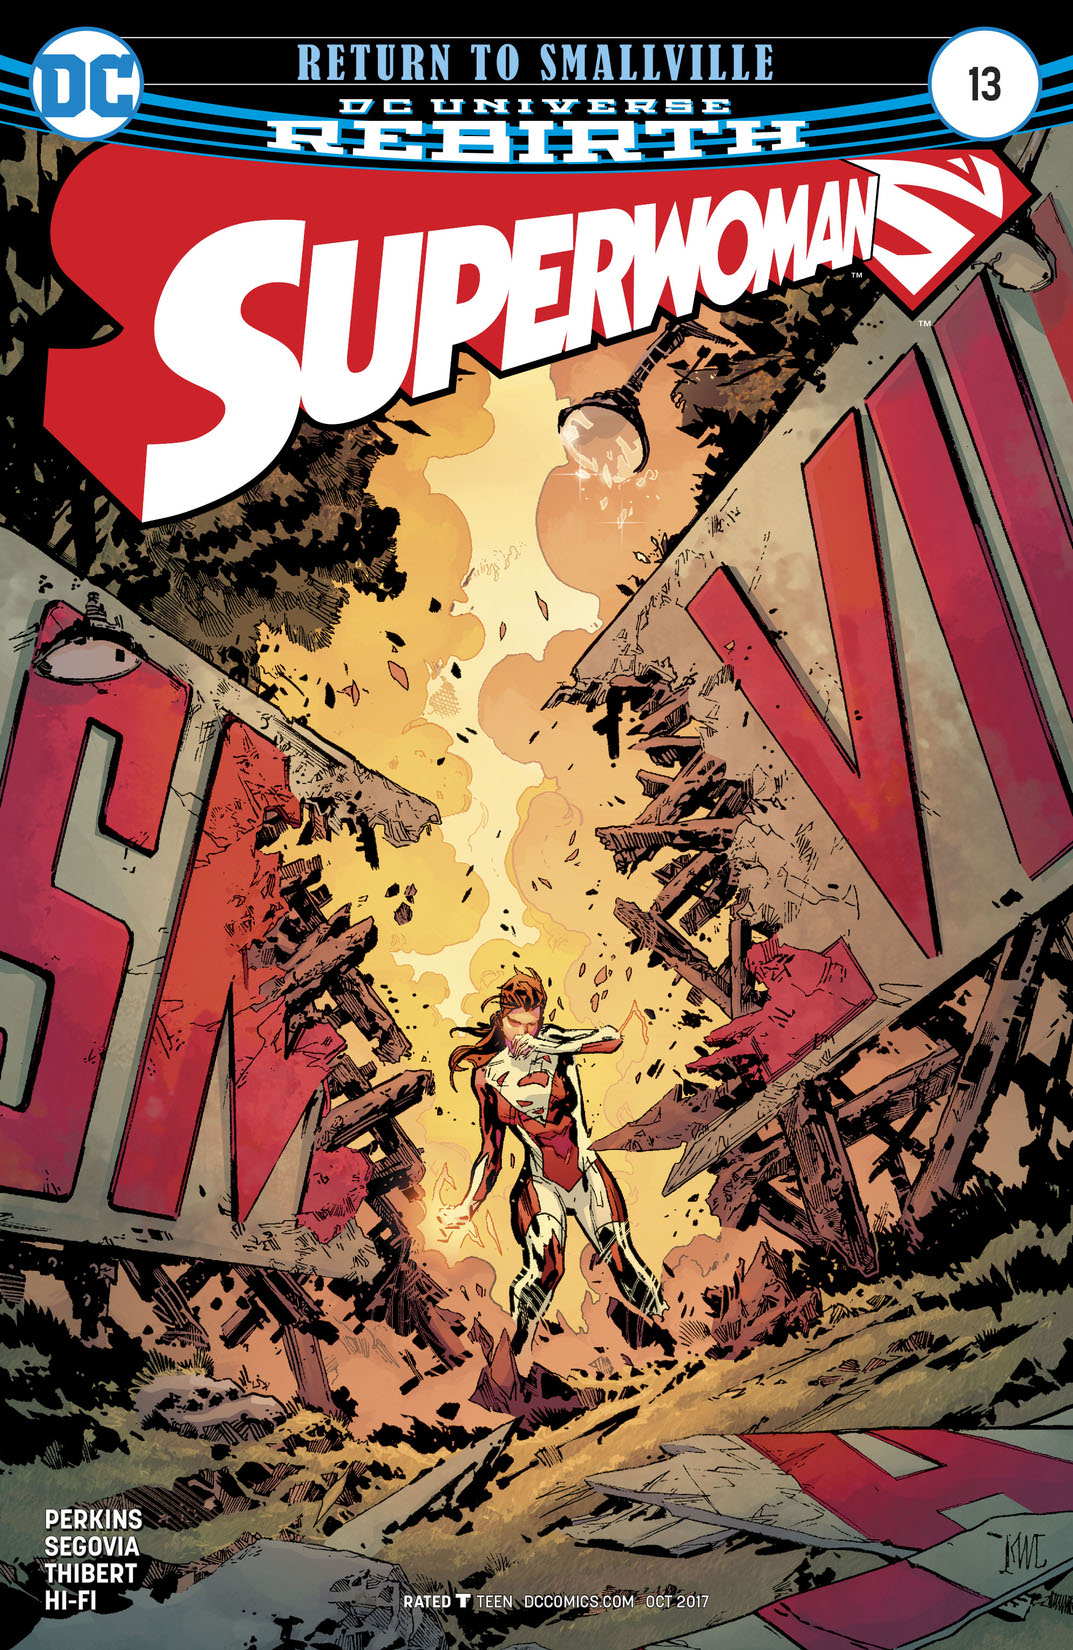 Superwoman #13 preview images